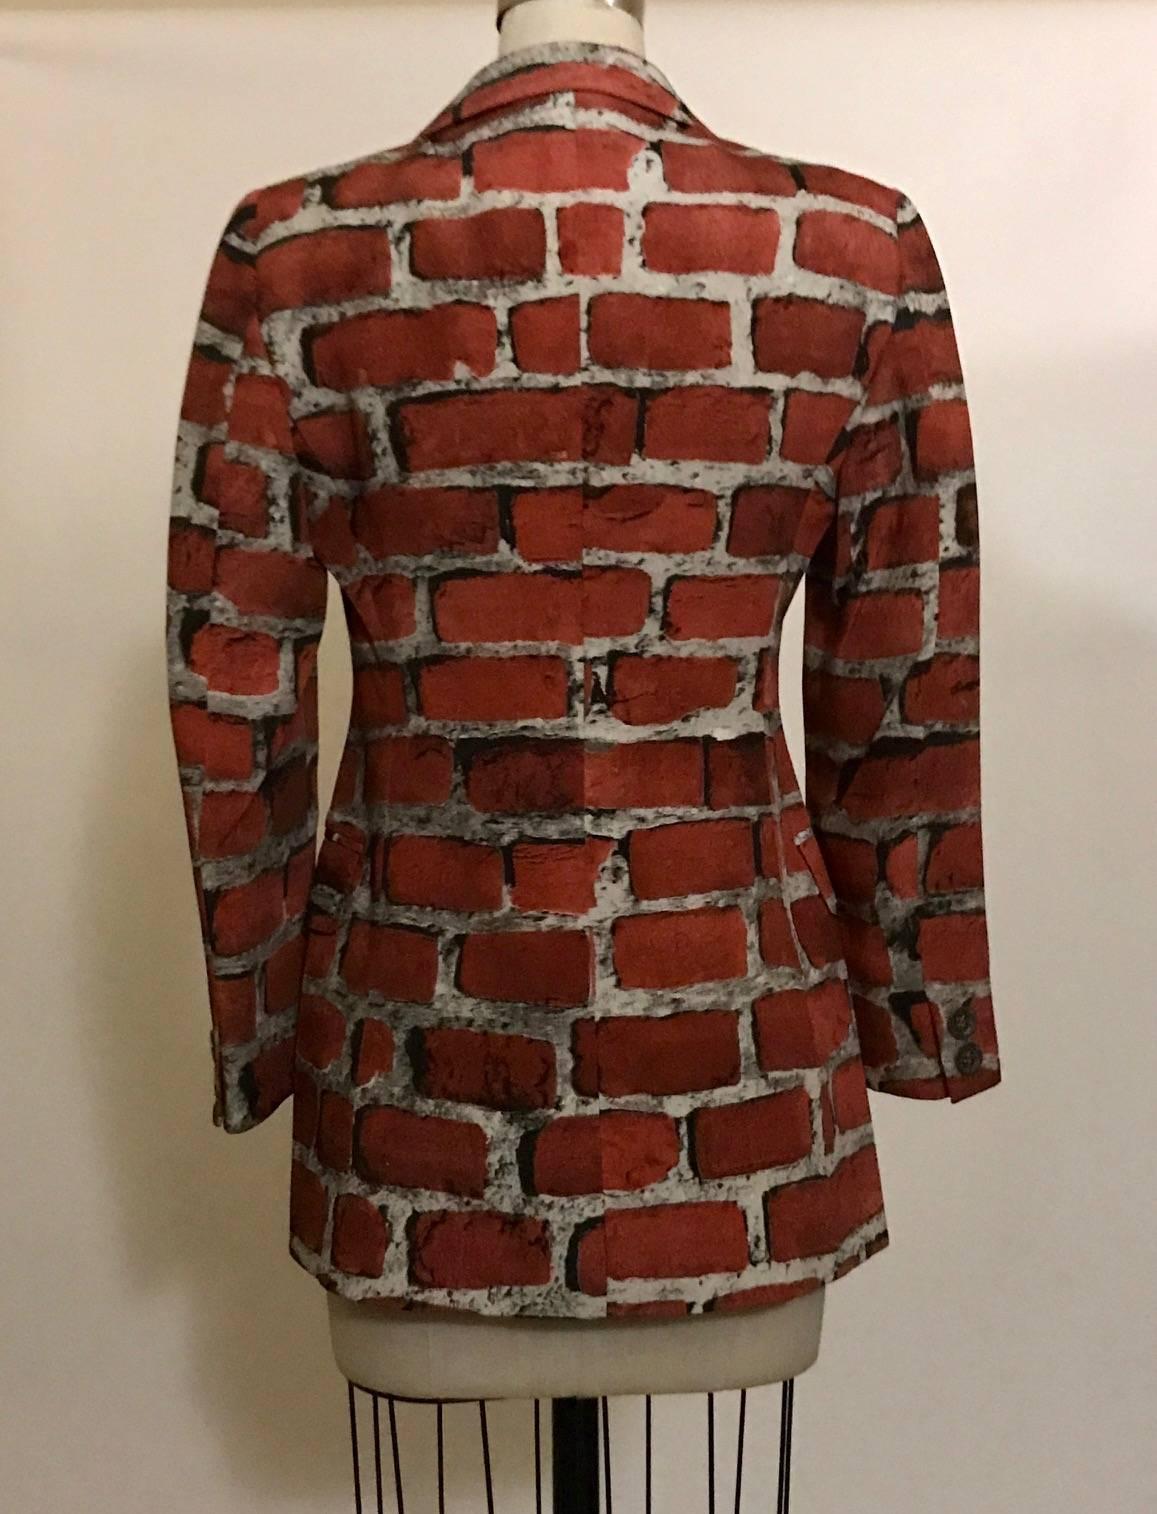 moschino brick suit